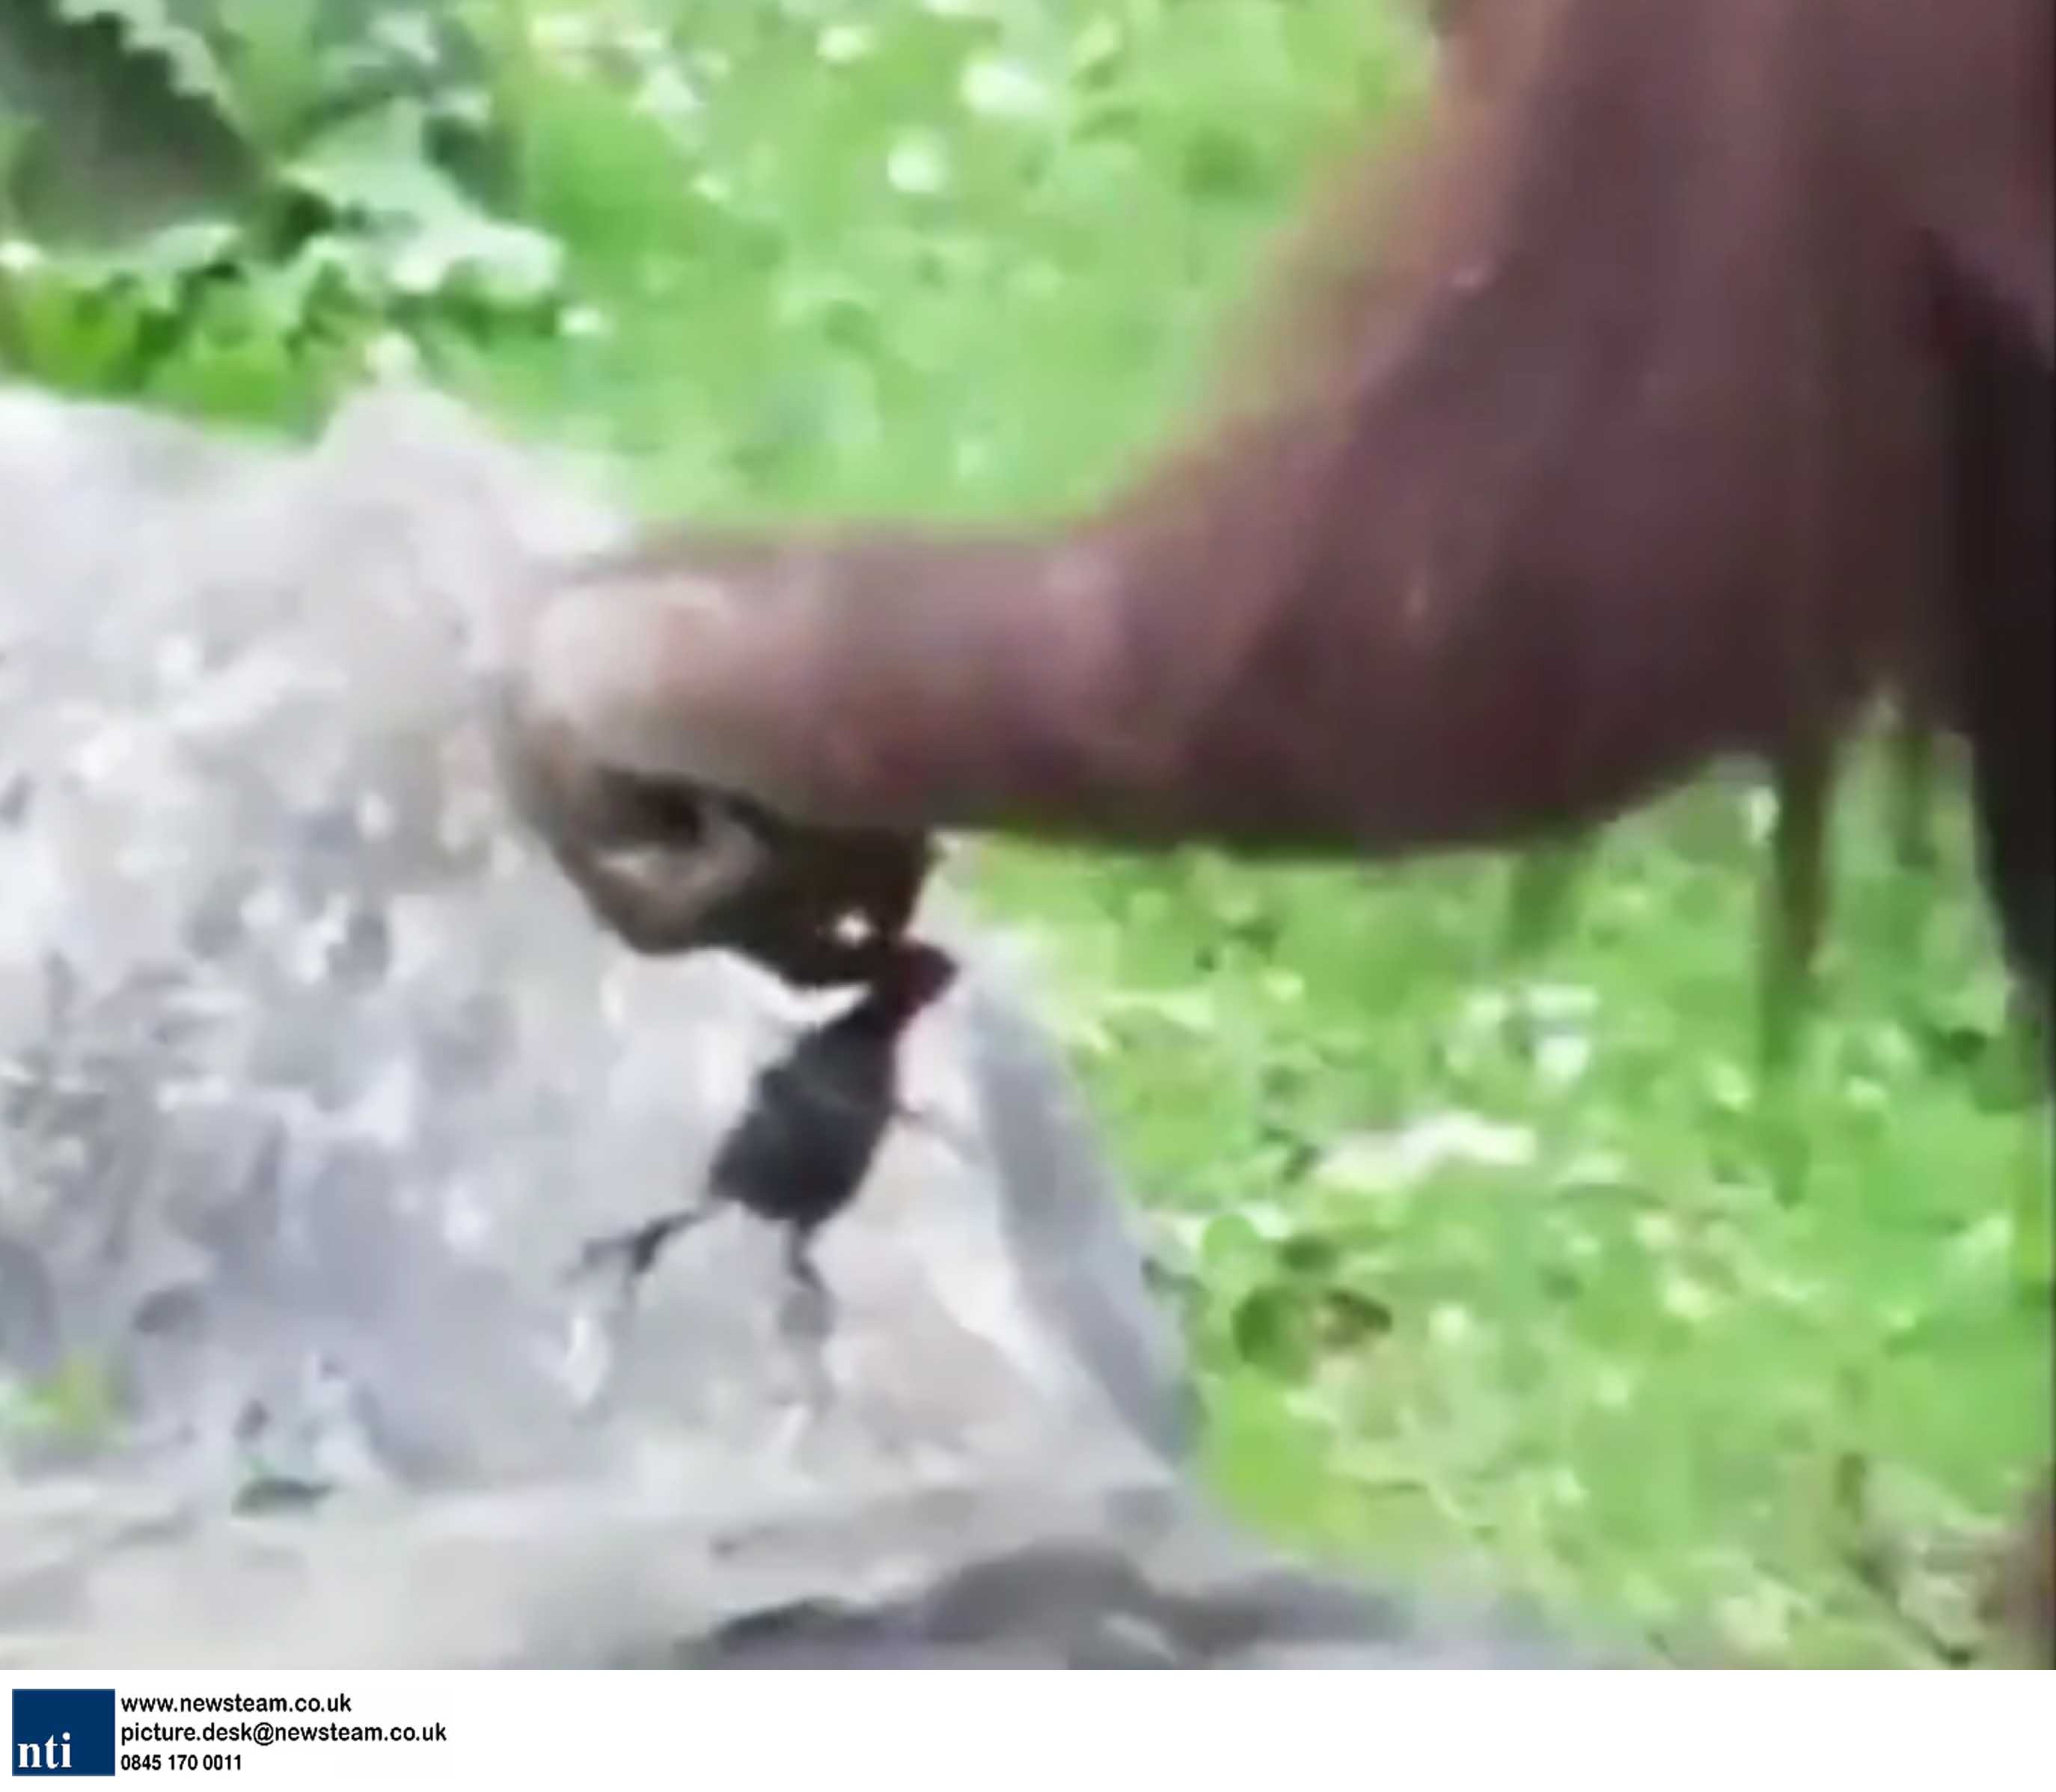 Orangutan saves baby duckling